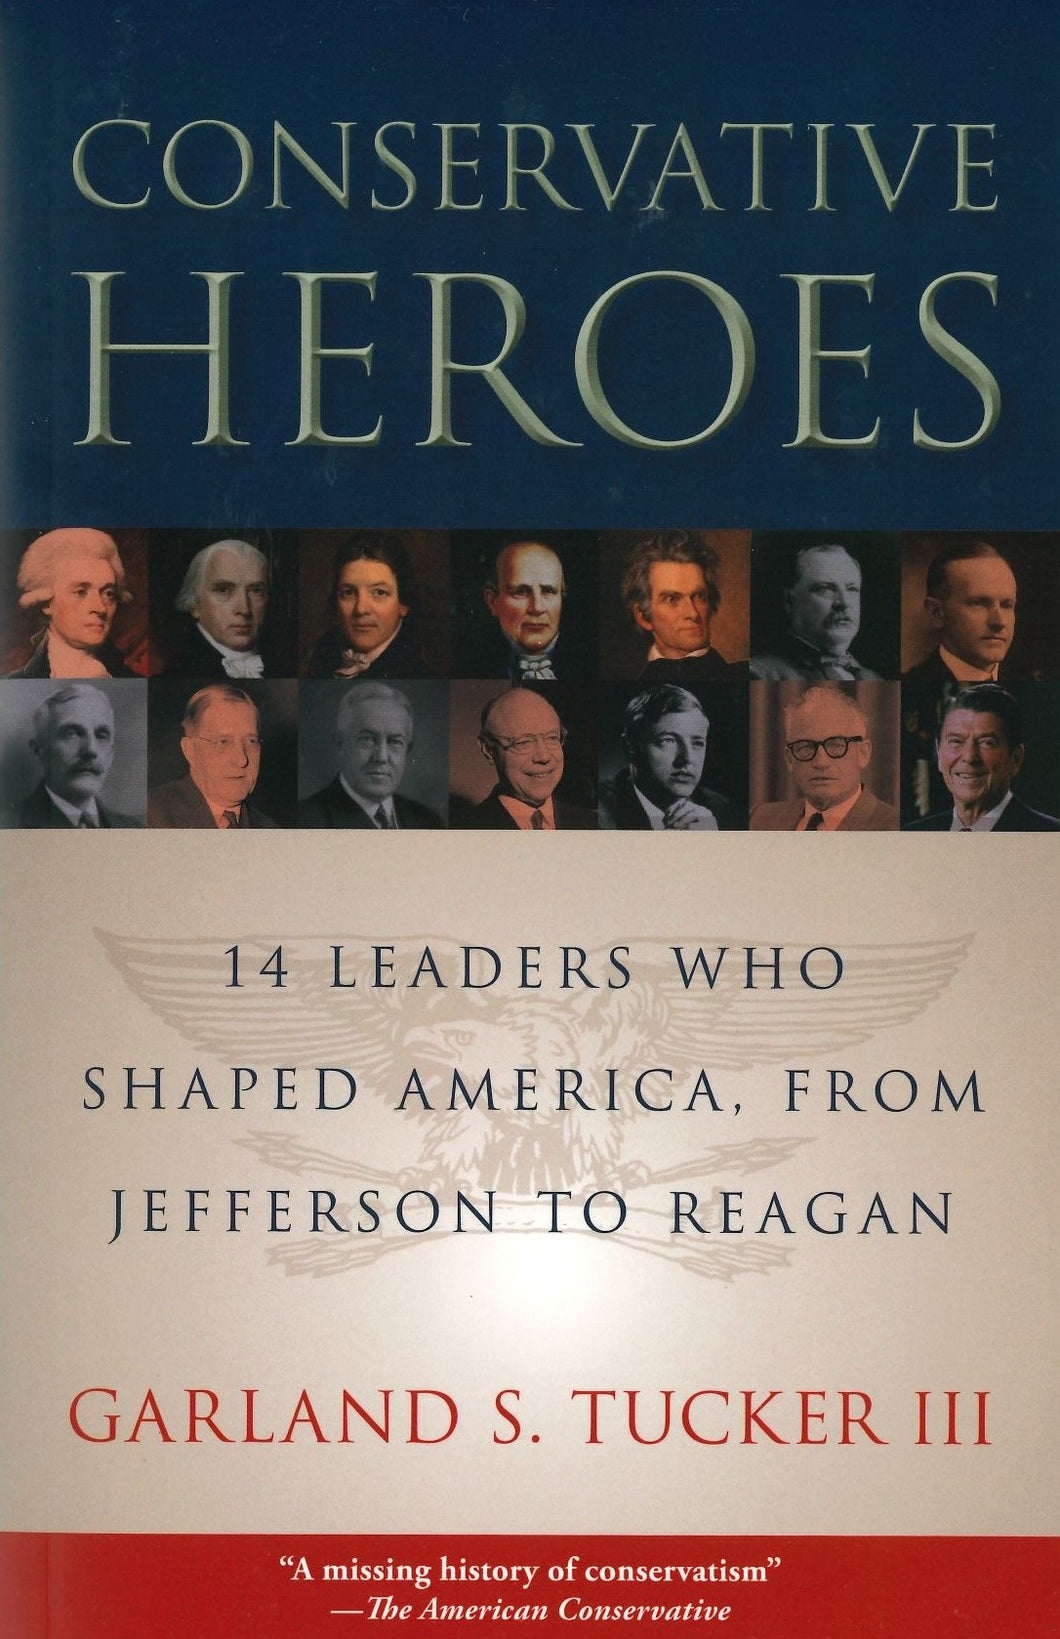 Conservative Heroes by Garland S. Tucker, III